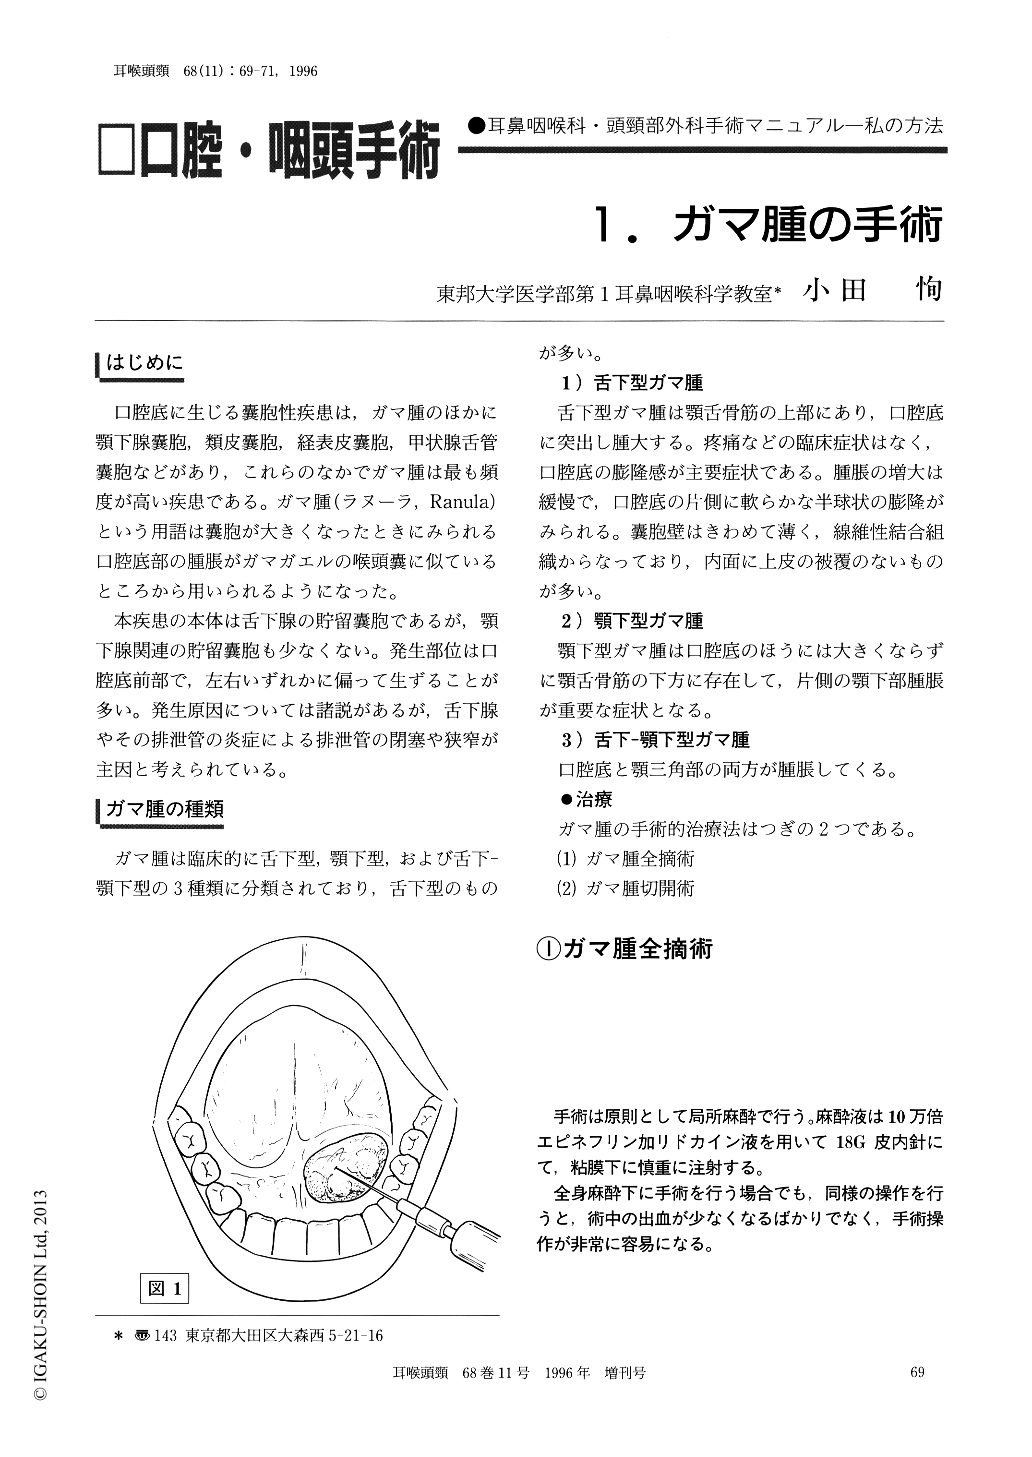 1．ガマ腫の手術 (耳鼻咽喉科・頭頸部外科 68巻11号) | 医書.jp